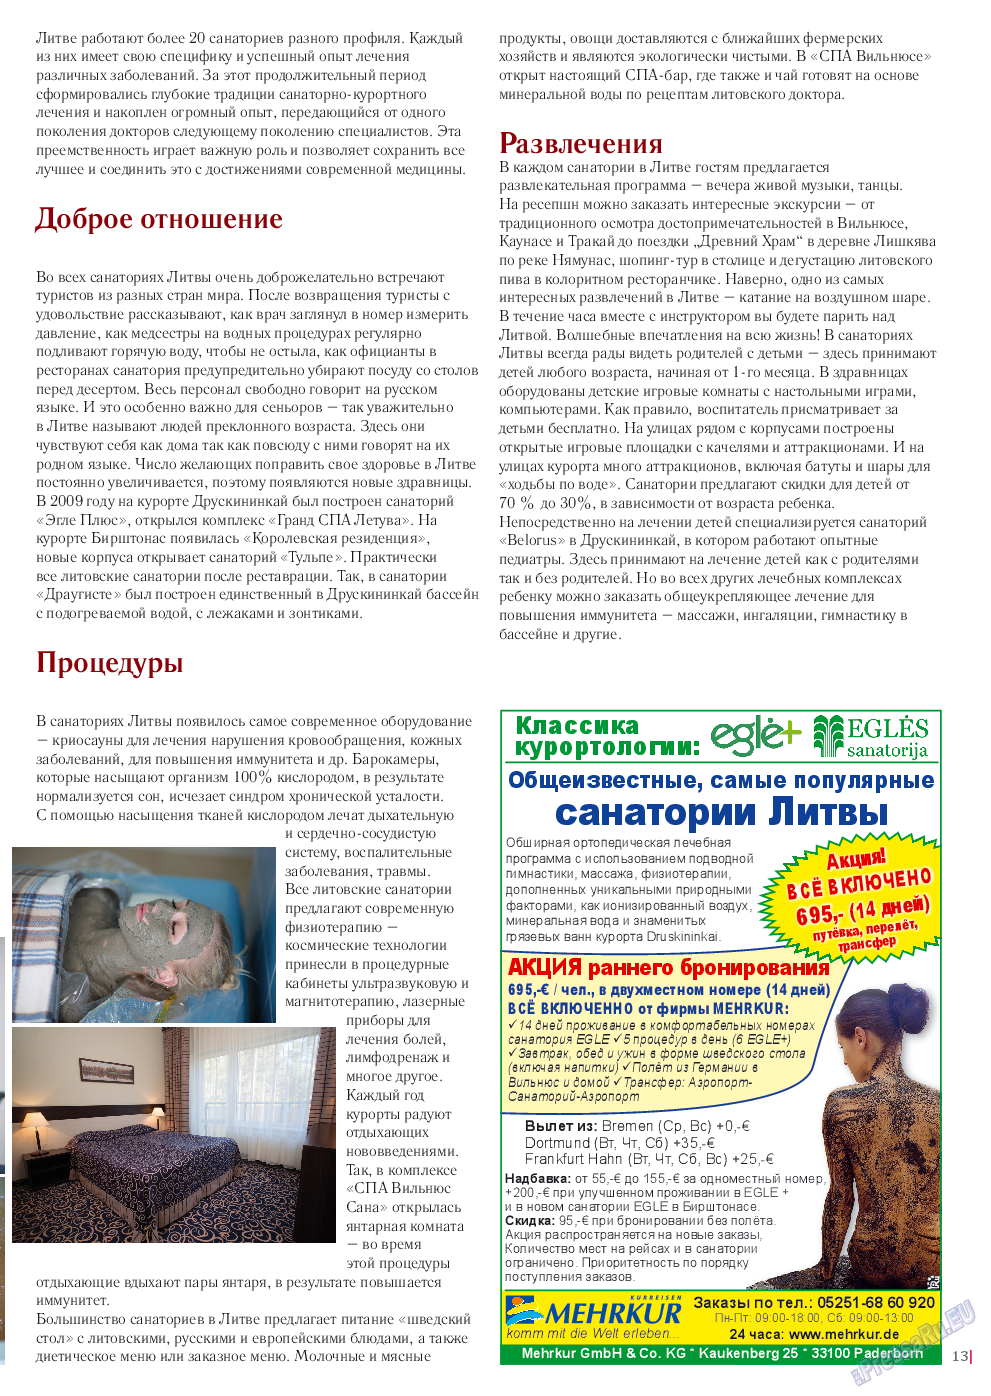 Катюша, журнал. 2016 №51 стр.13